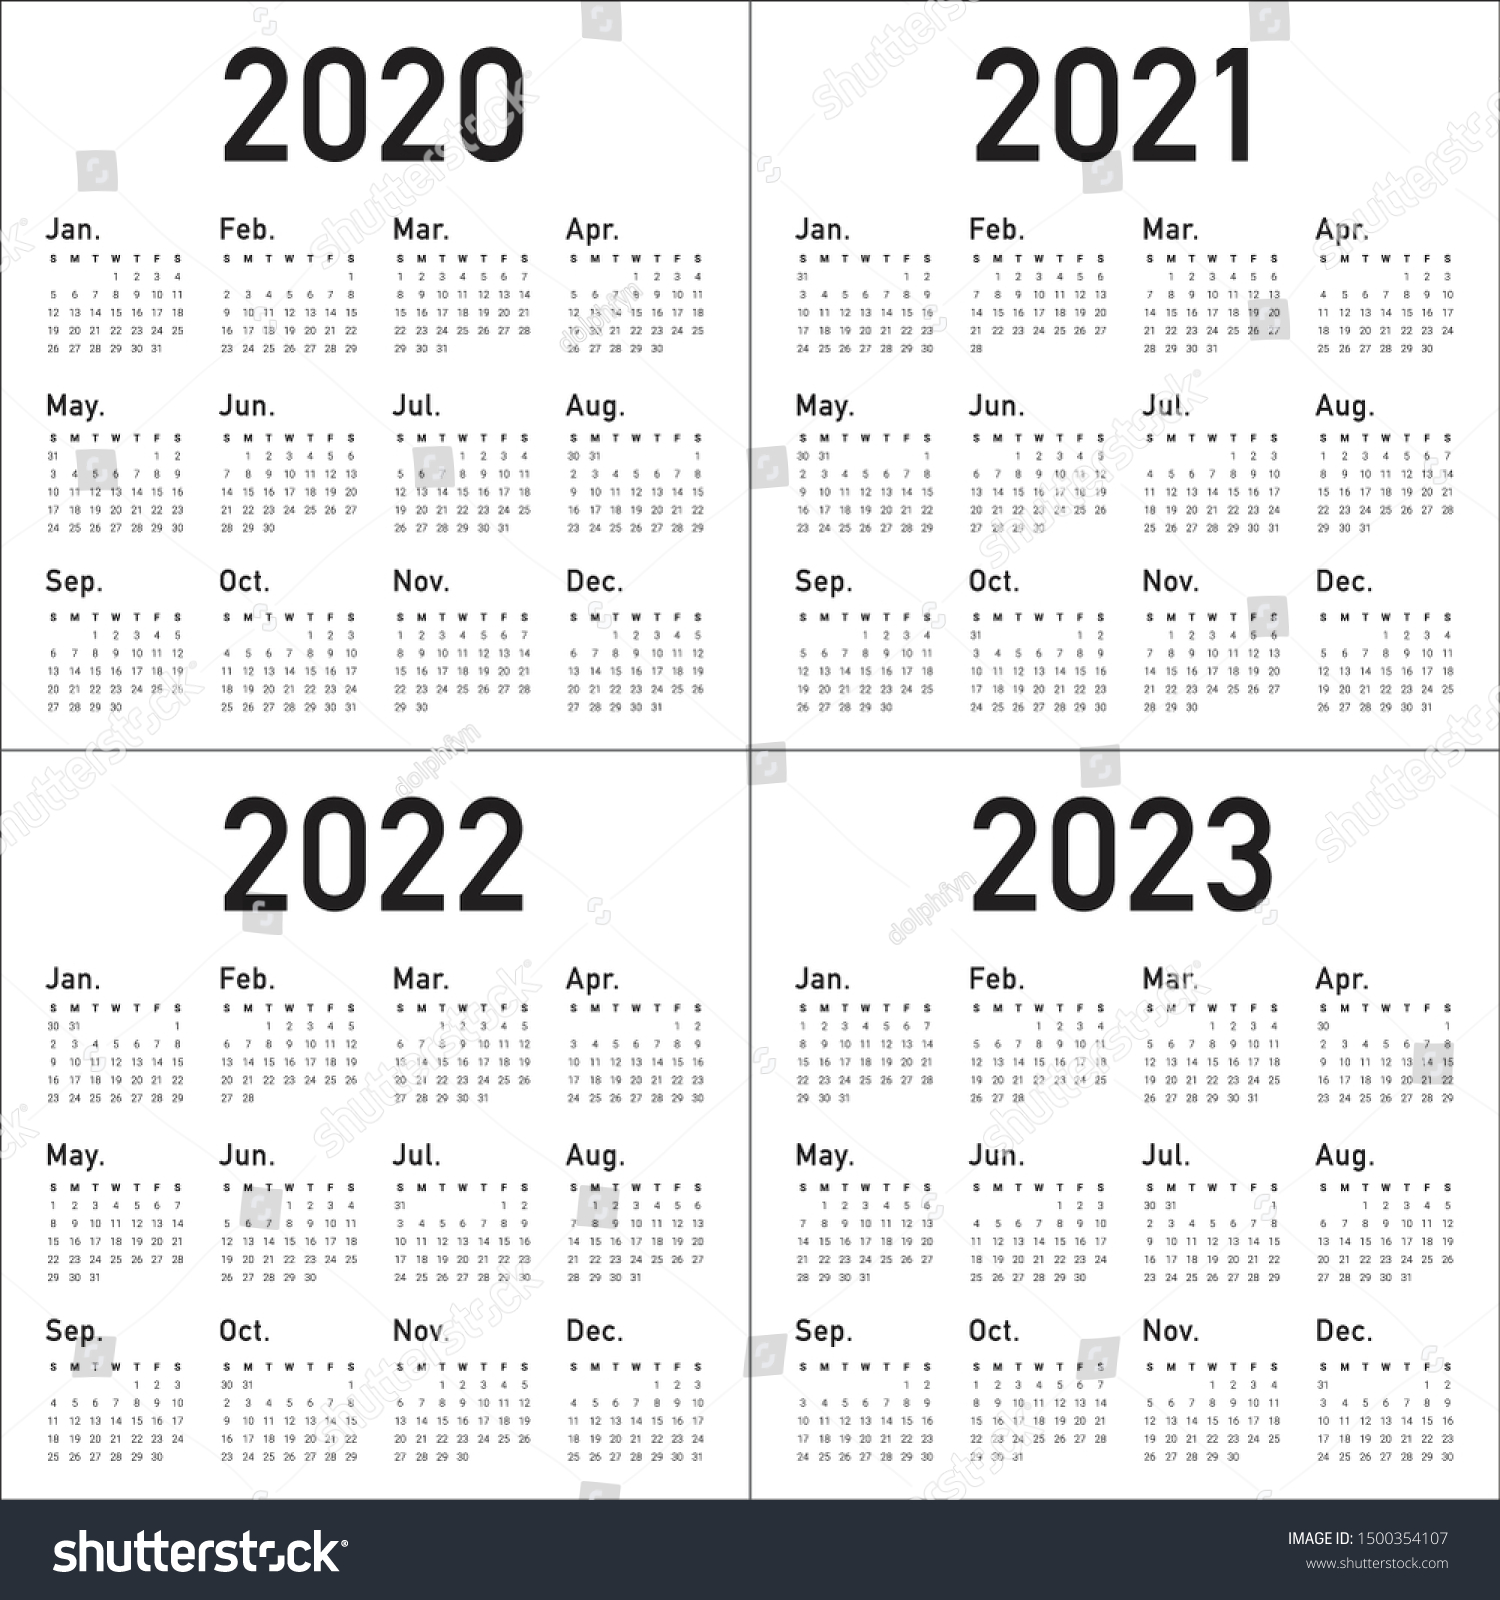 Nyu 2022 2023 Calendar Year 2020 2021 2022 2023 Calendar Stock Vector (Royalty Free) 1500354107